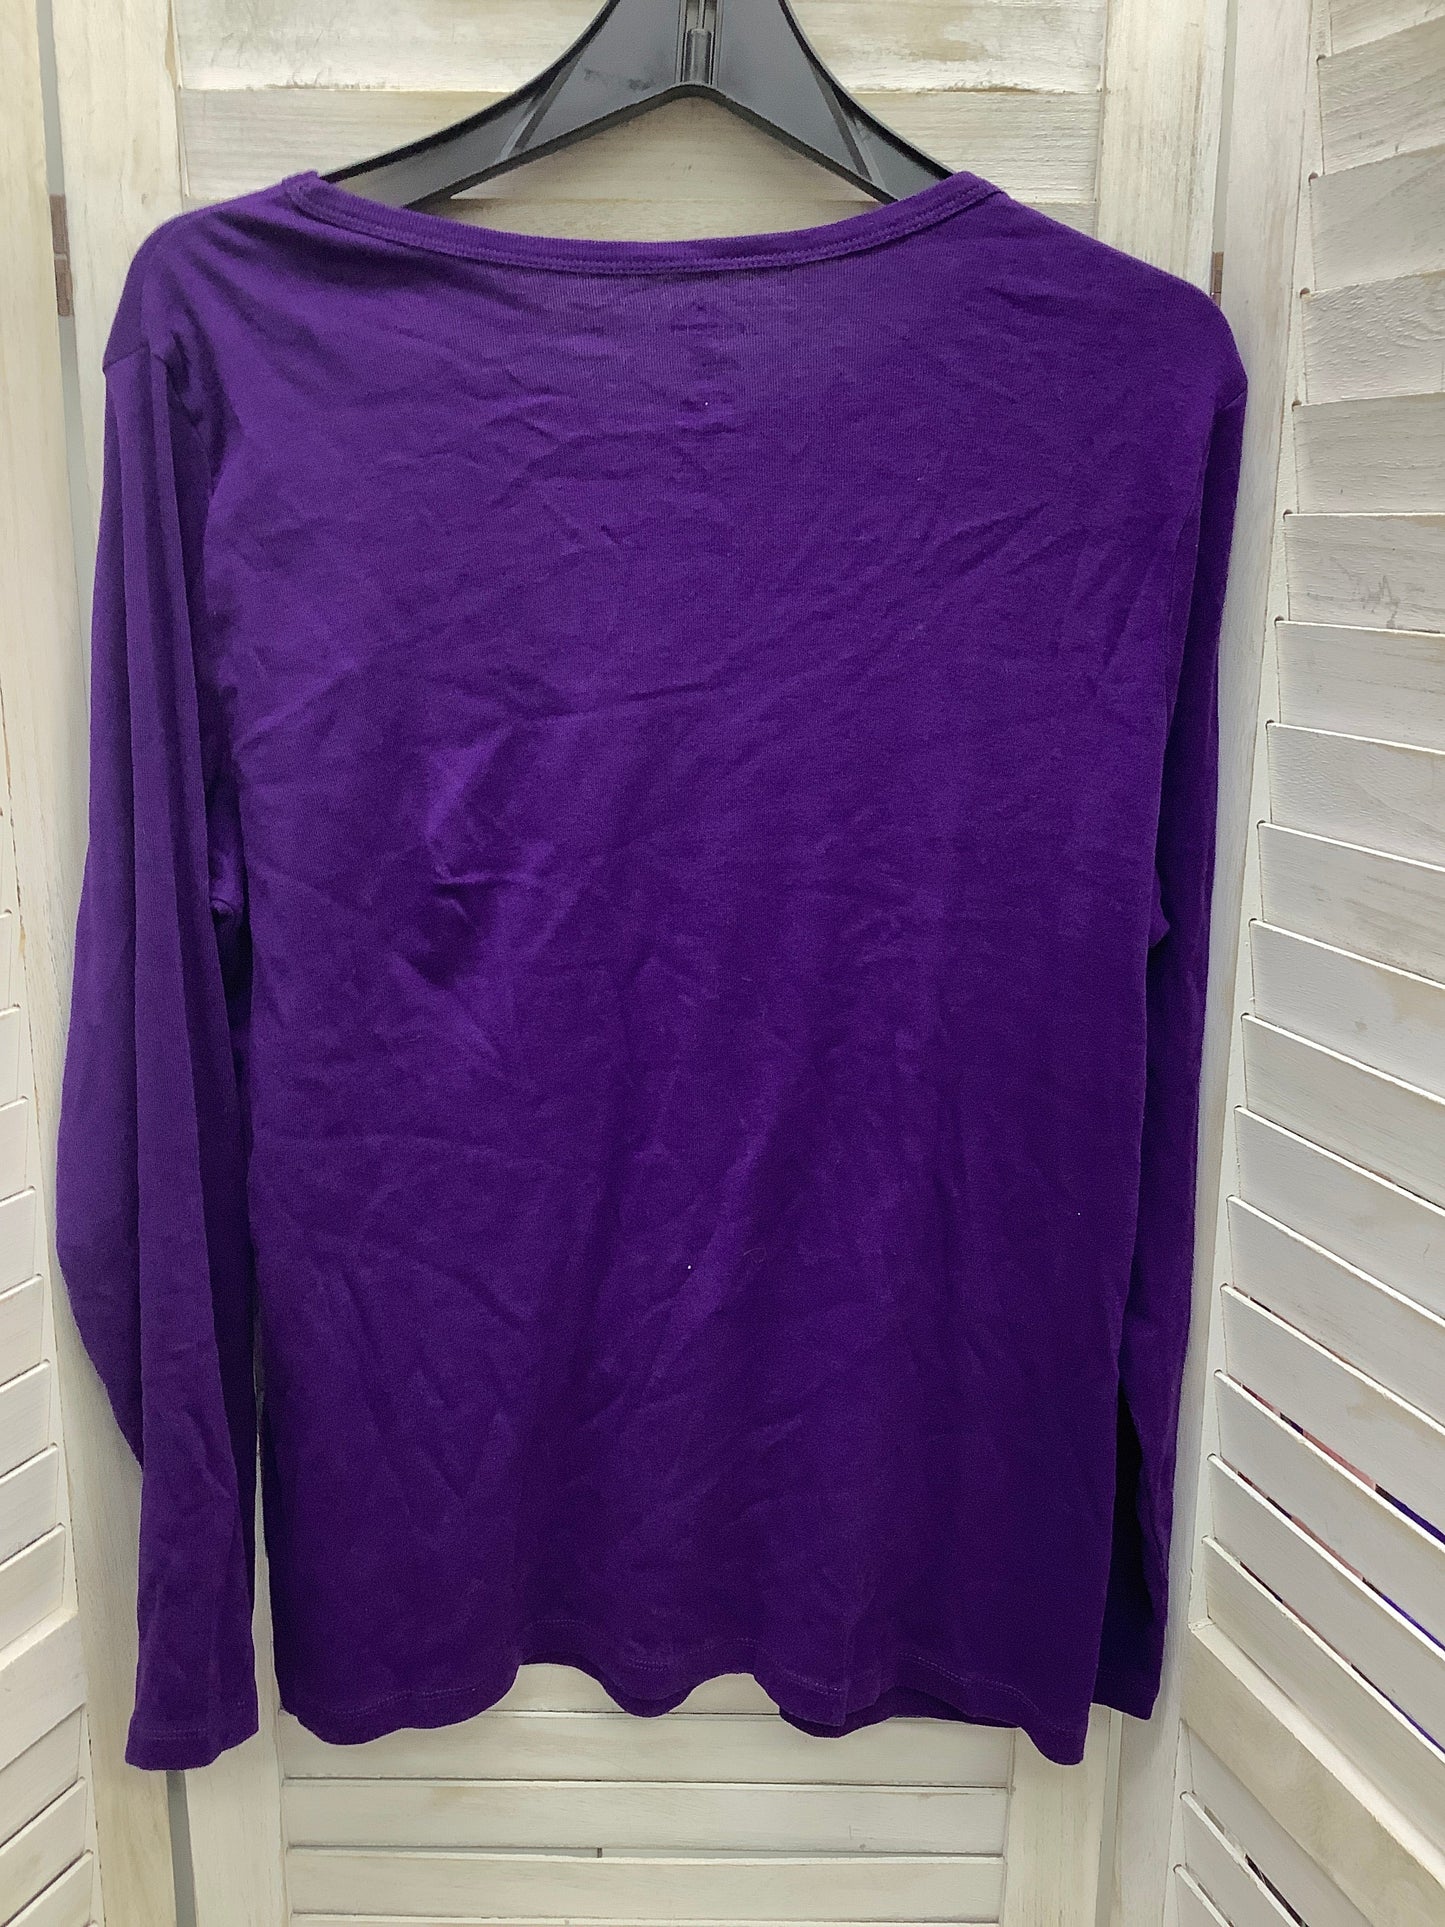 Purple Top Long Sleeve Basic St Johns Bay, Size Xl